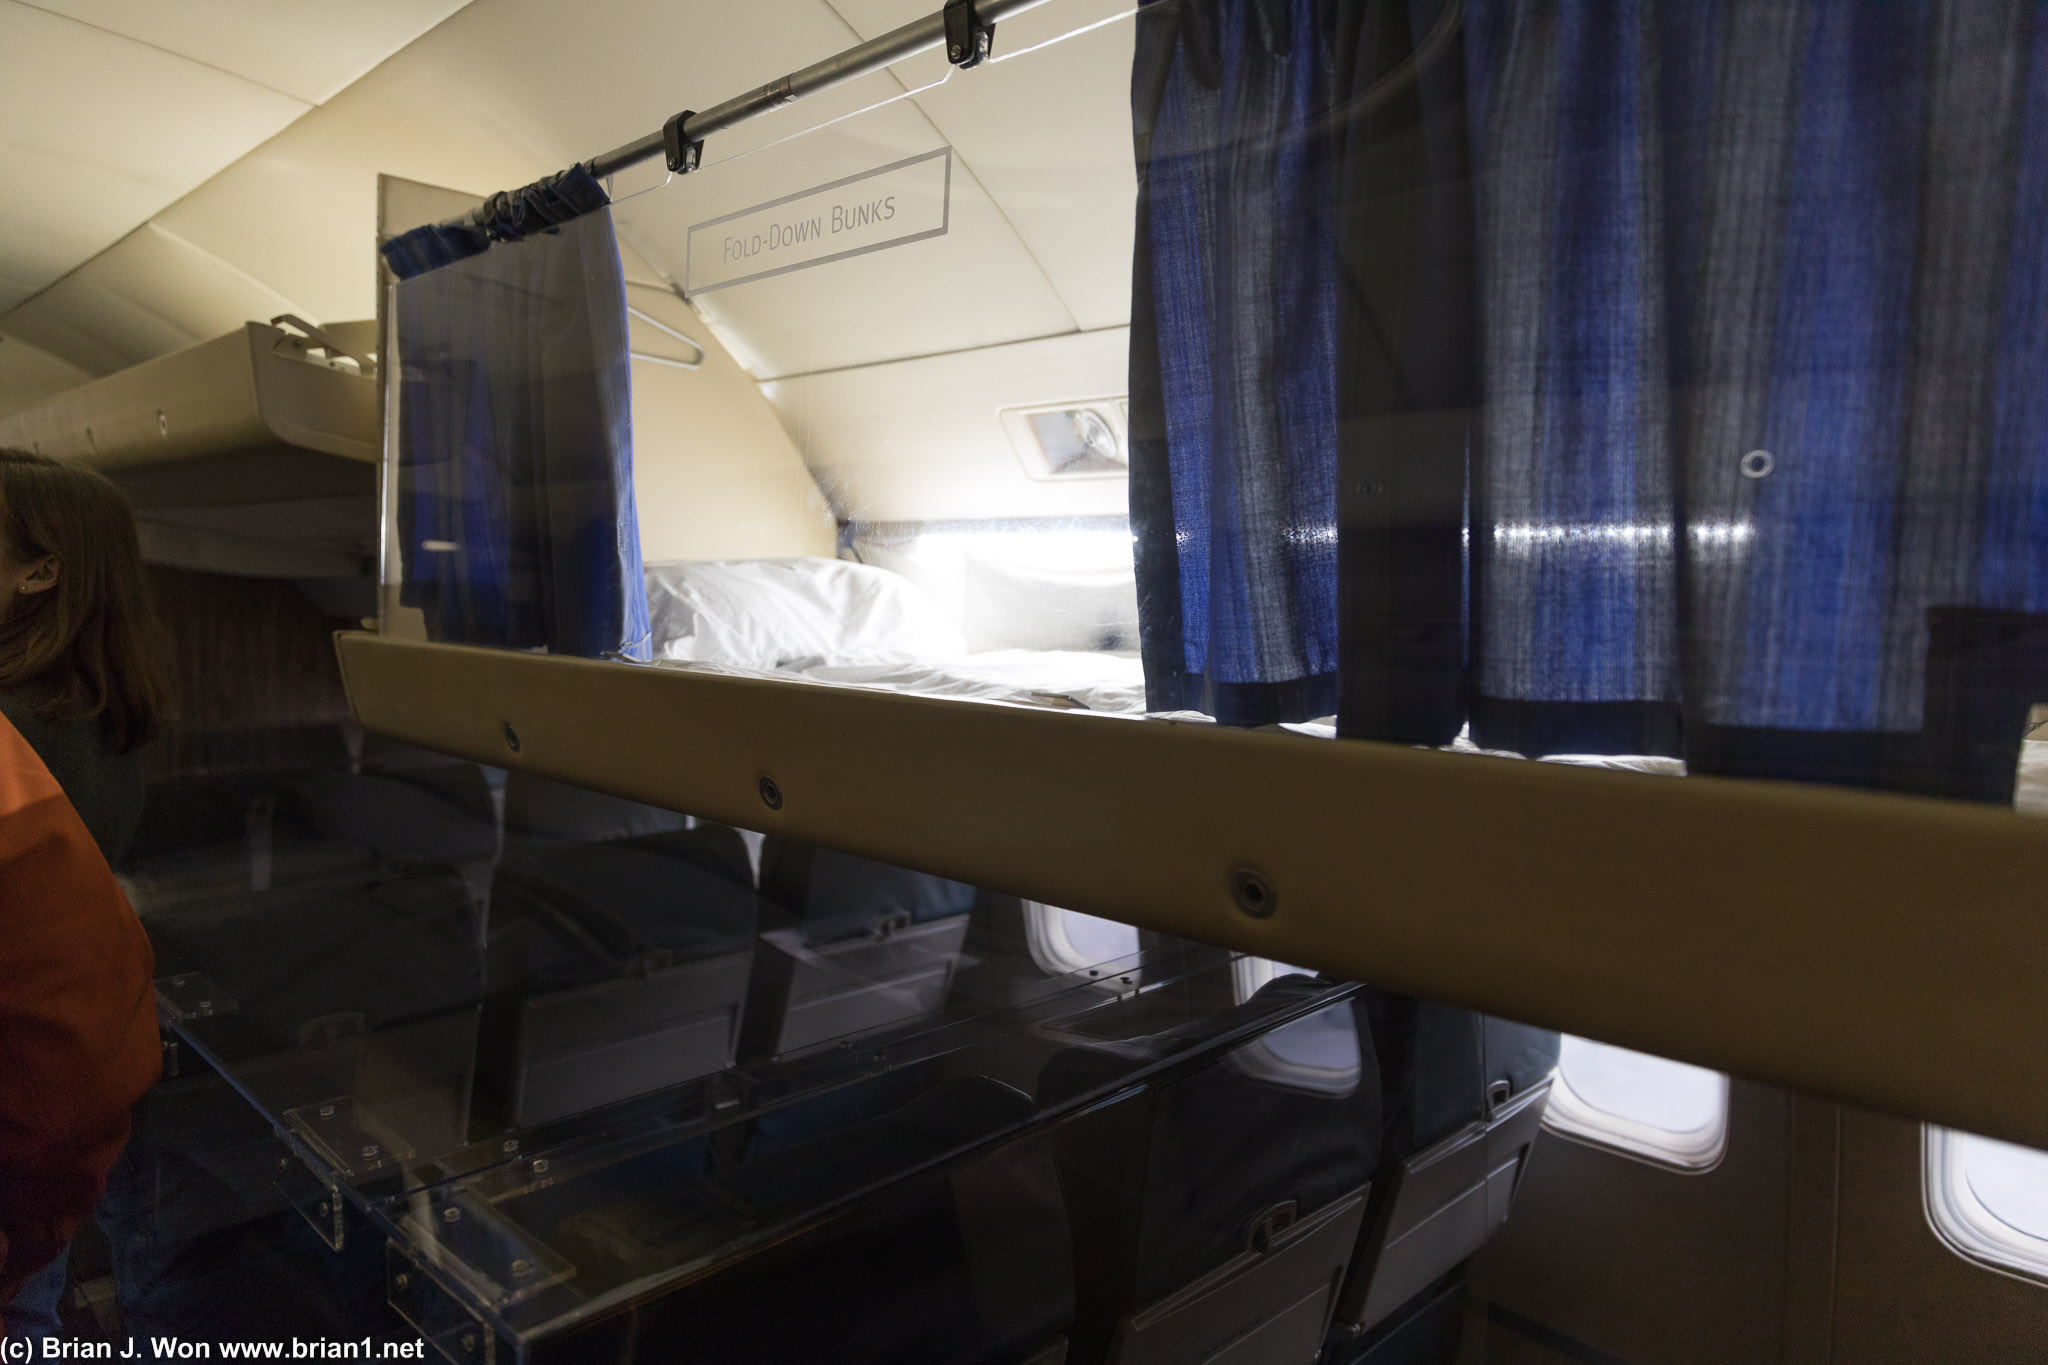 Fold-down bunks inside VC-137B.